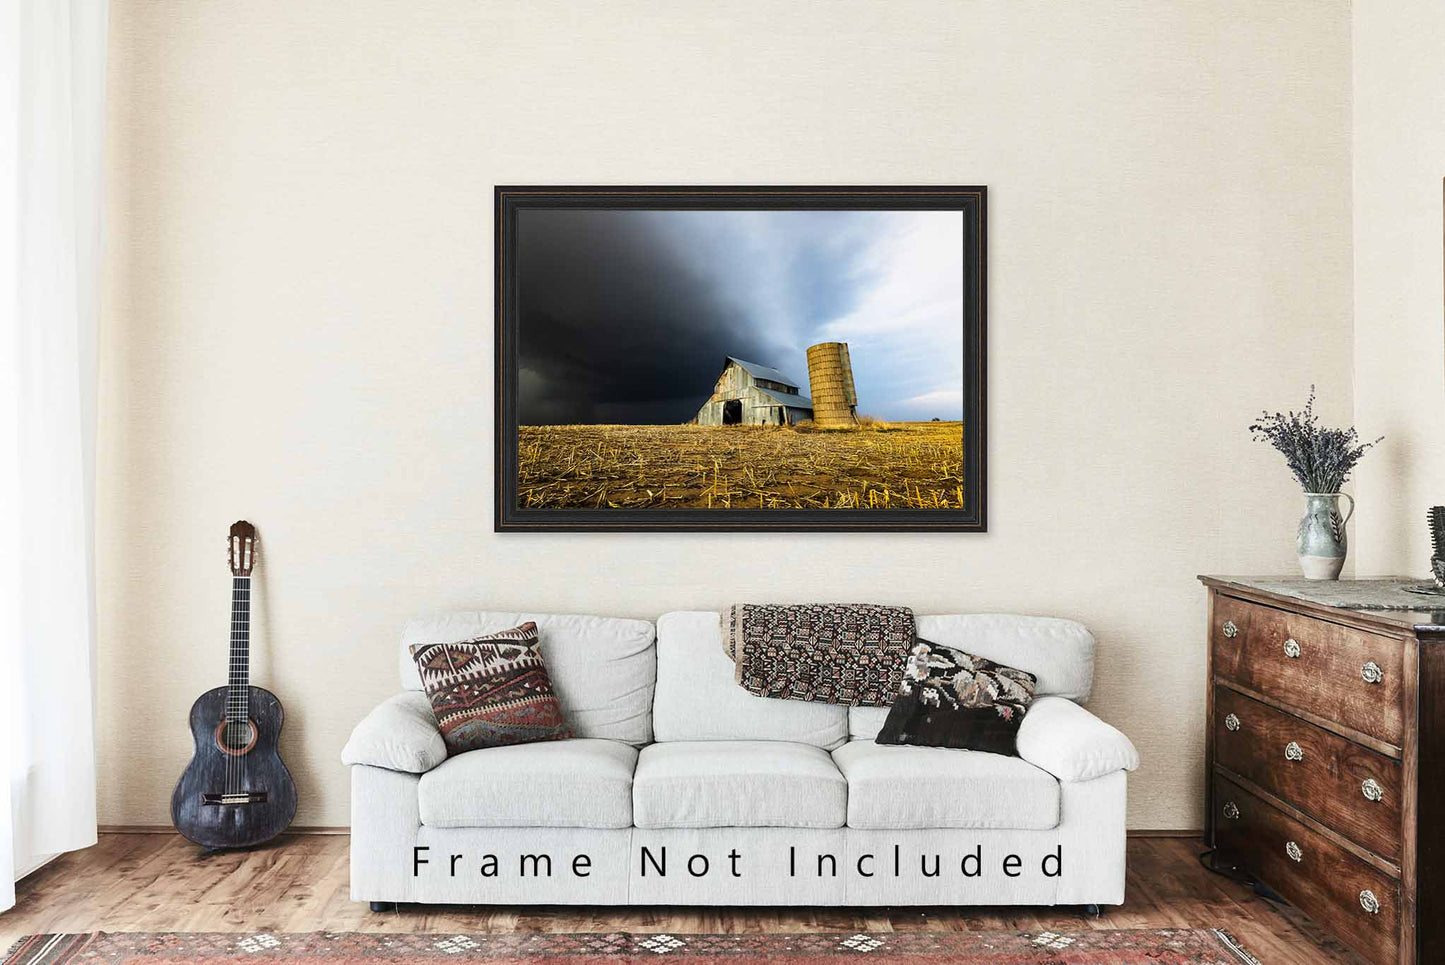 Country Photo Print | Barn and Grain Silo Picture | Kansas Wall Art | Great Plains Photography | Farmhouse Decor